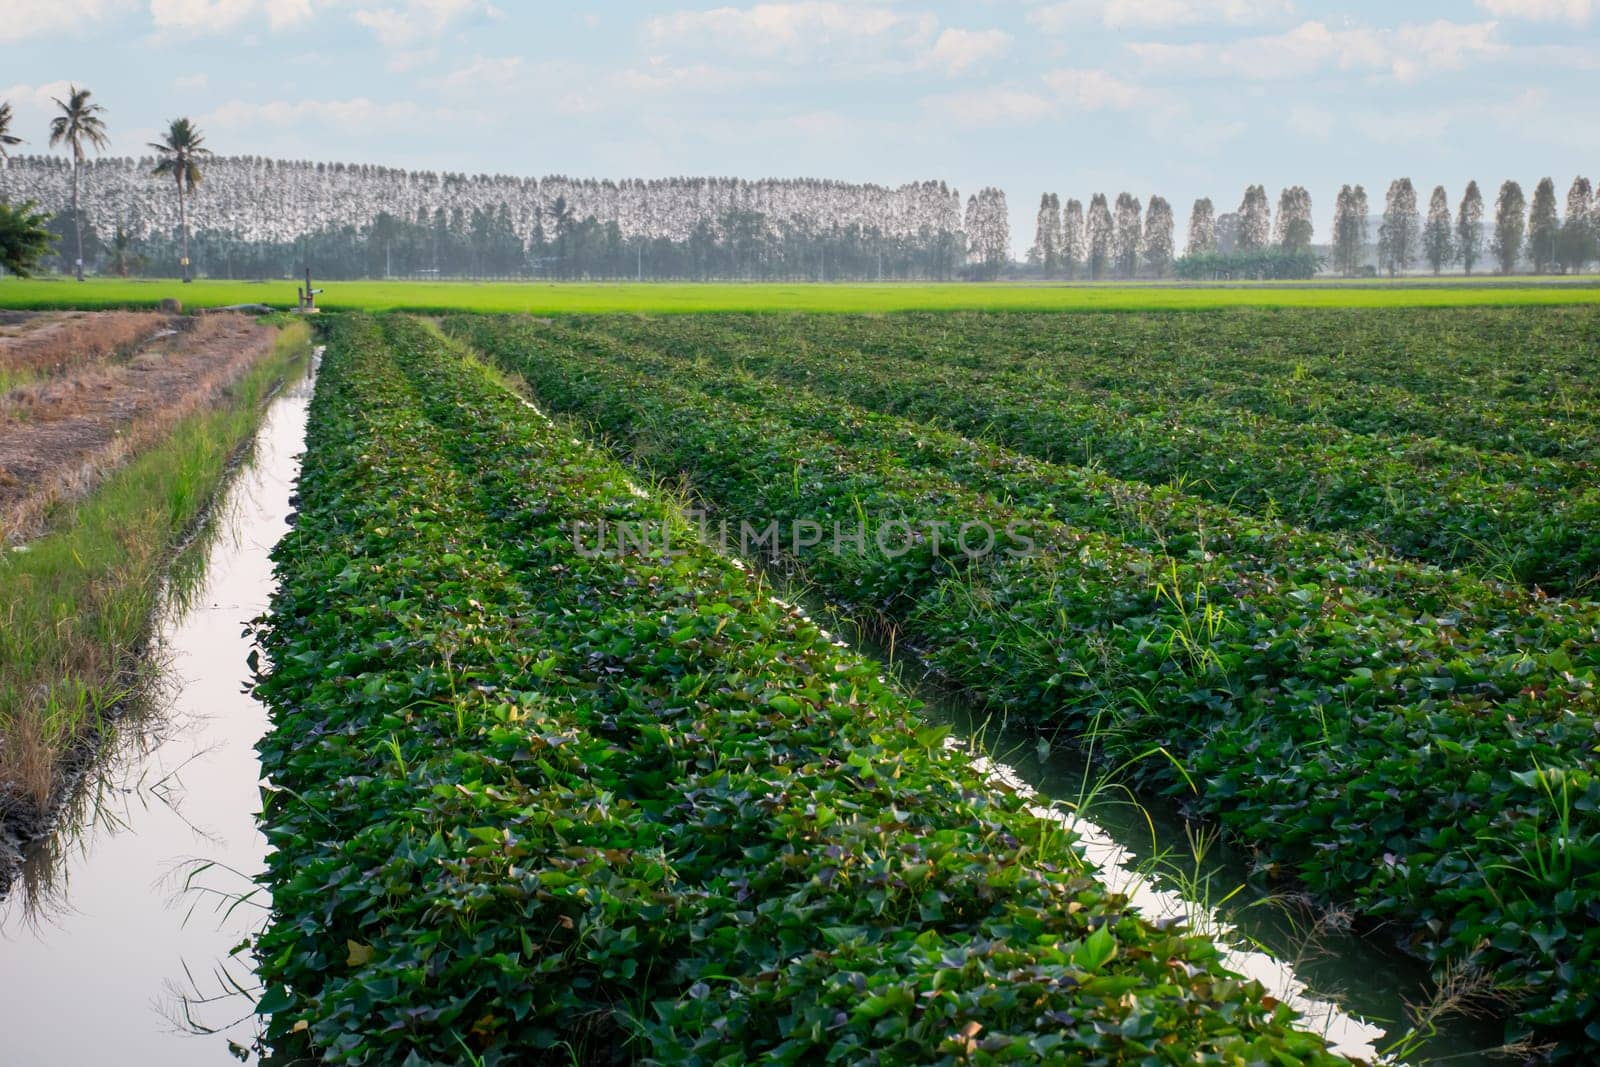 Nature of sweet potatoes plantation, yam farming by NongEngEng